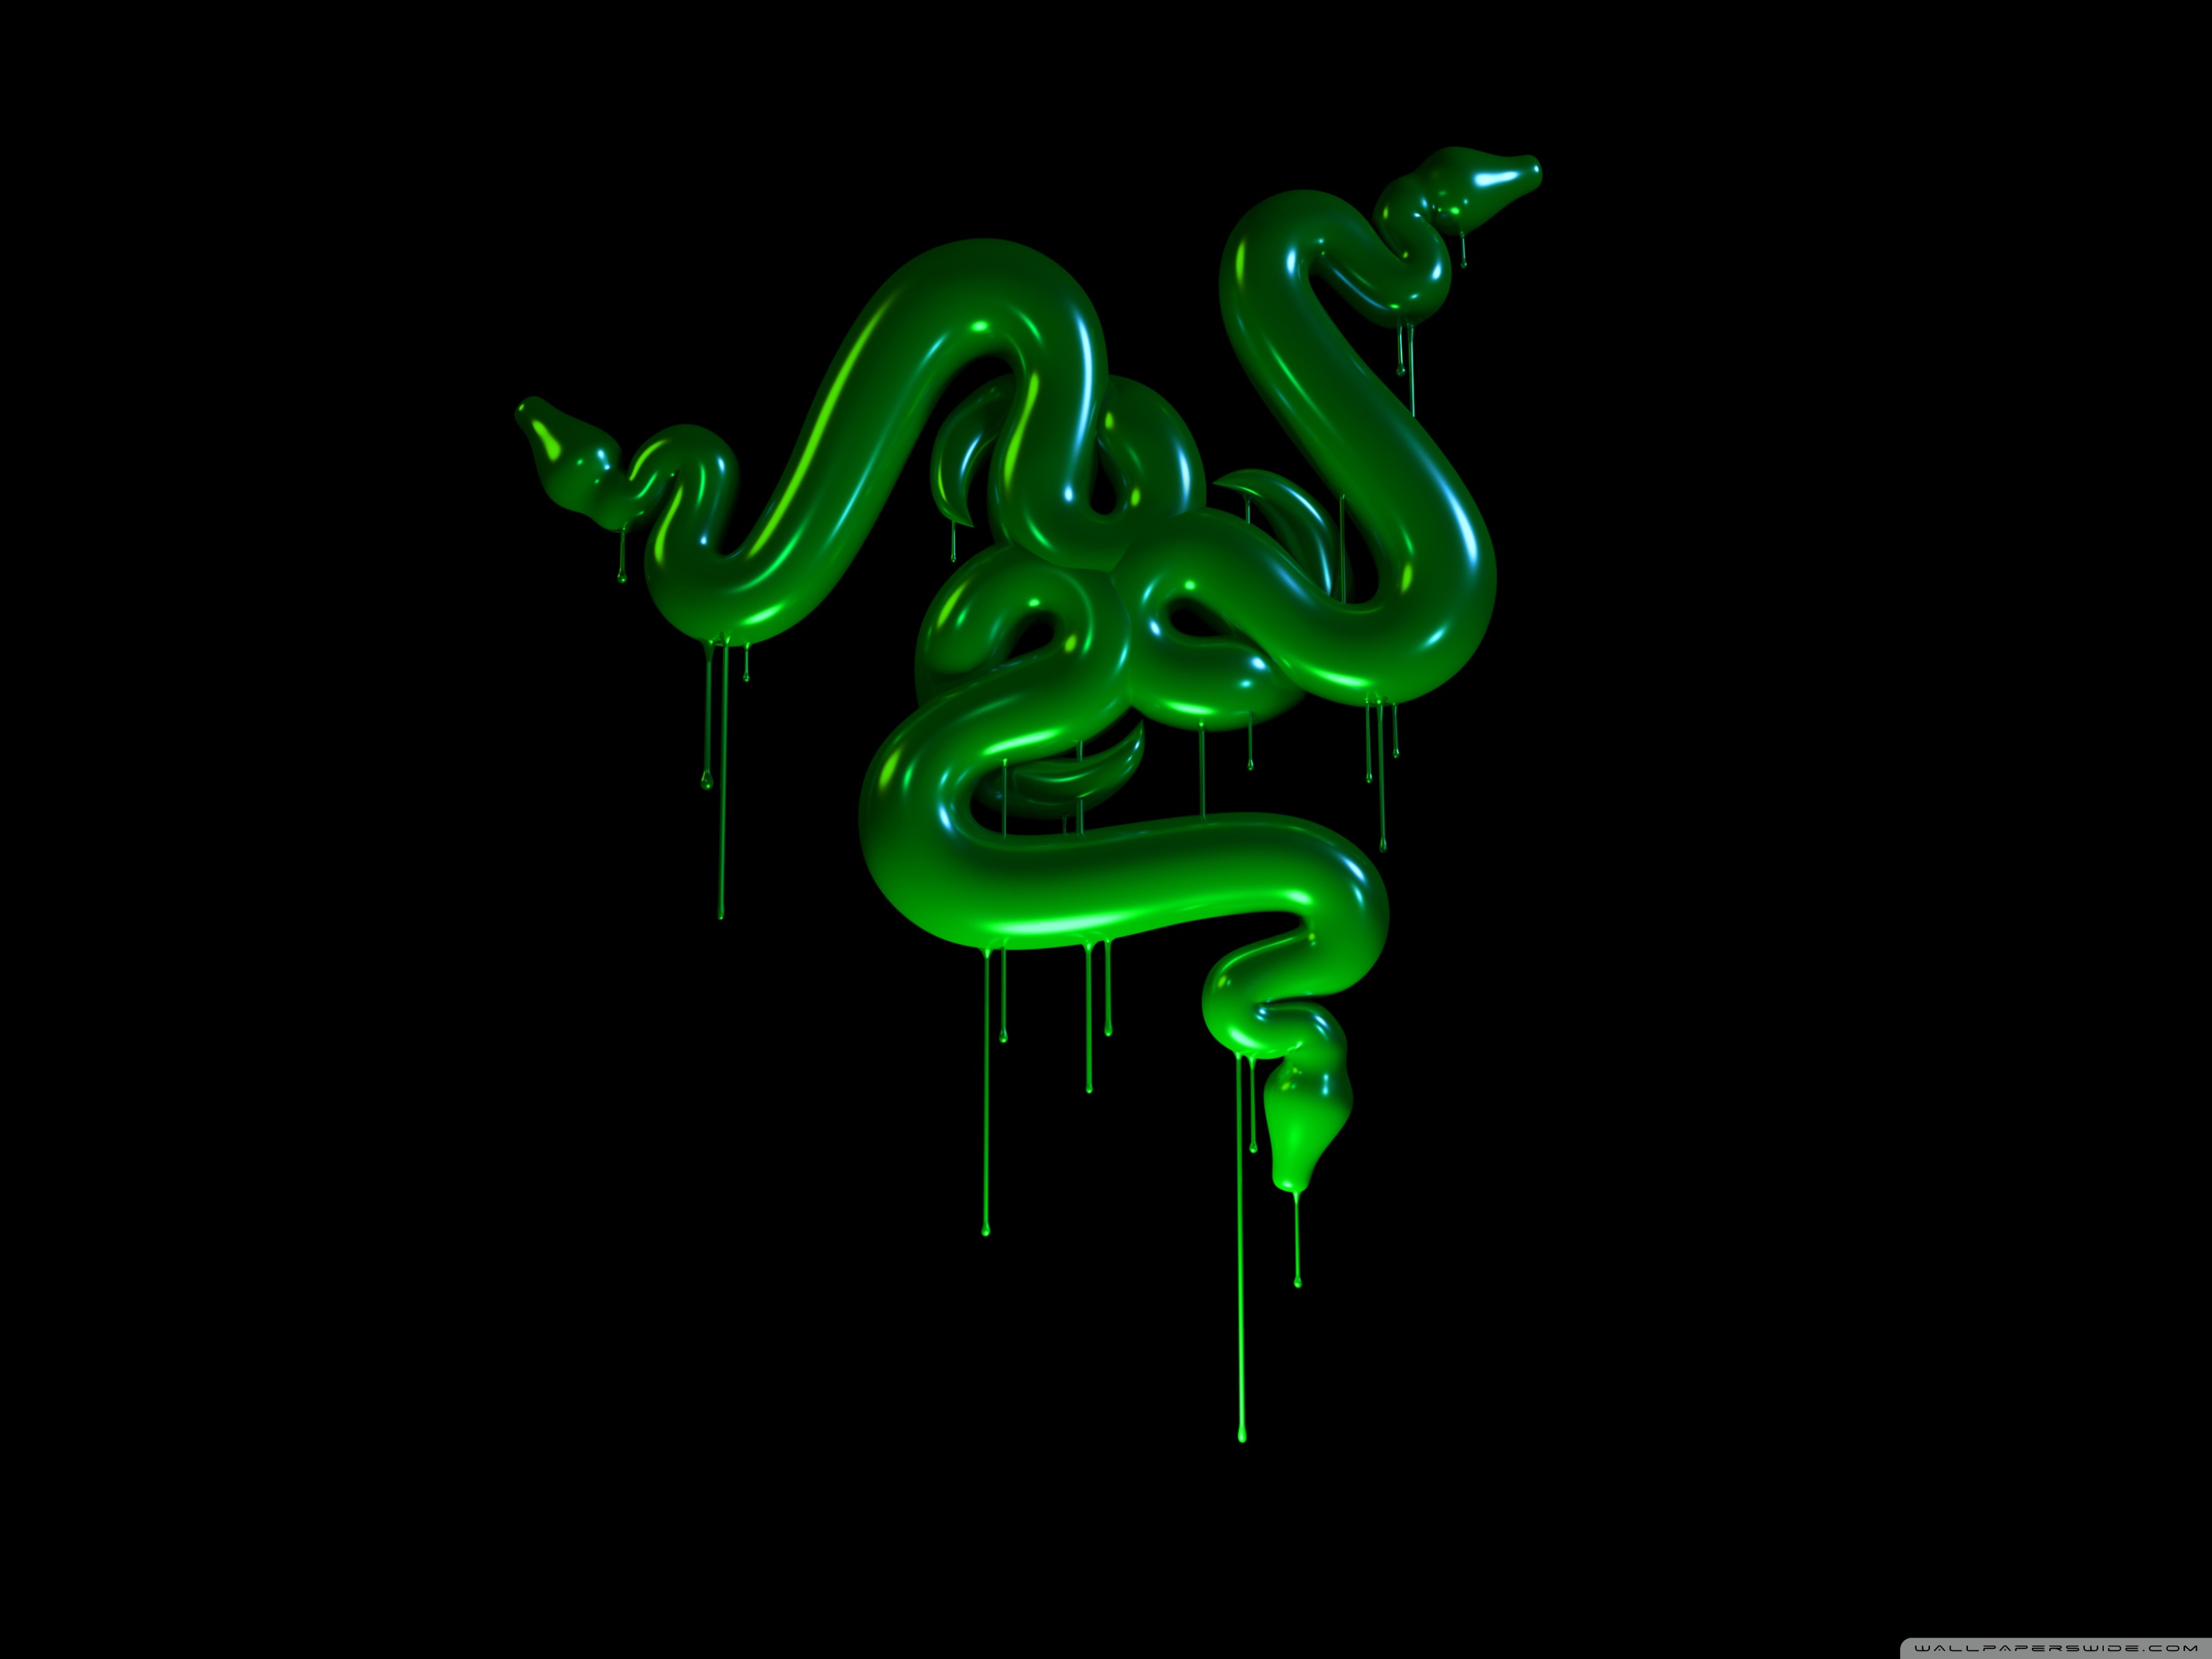 Free wallpaper no.4 phosphor slime :) by CreamyApplePies on DeviantArt